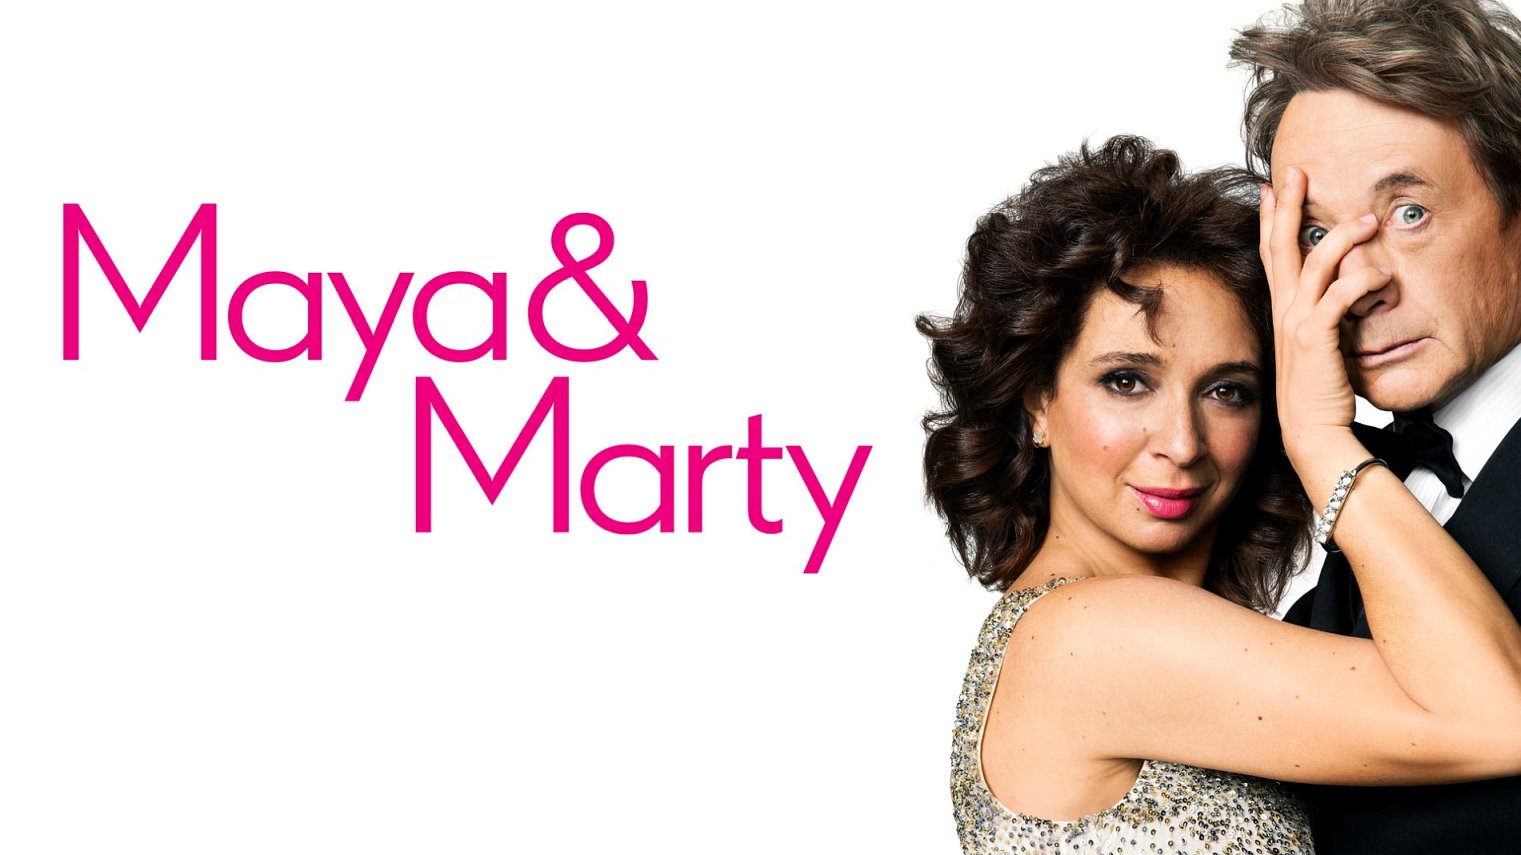 cast of Maya & Marty season 1